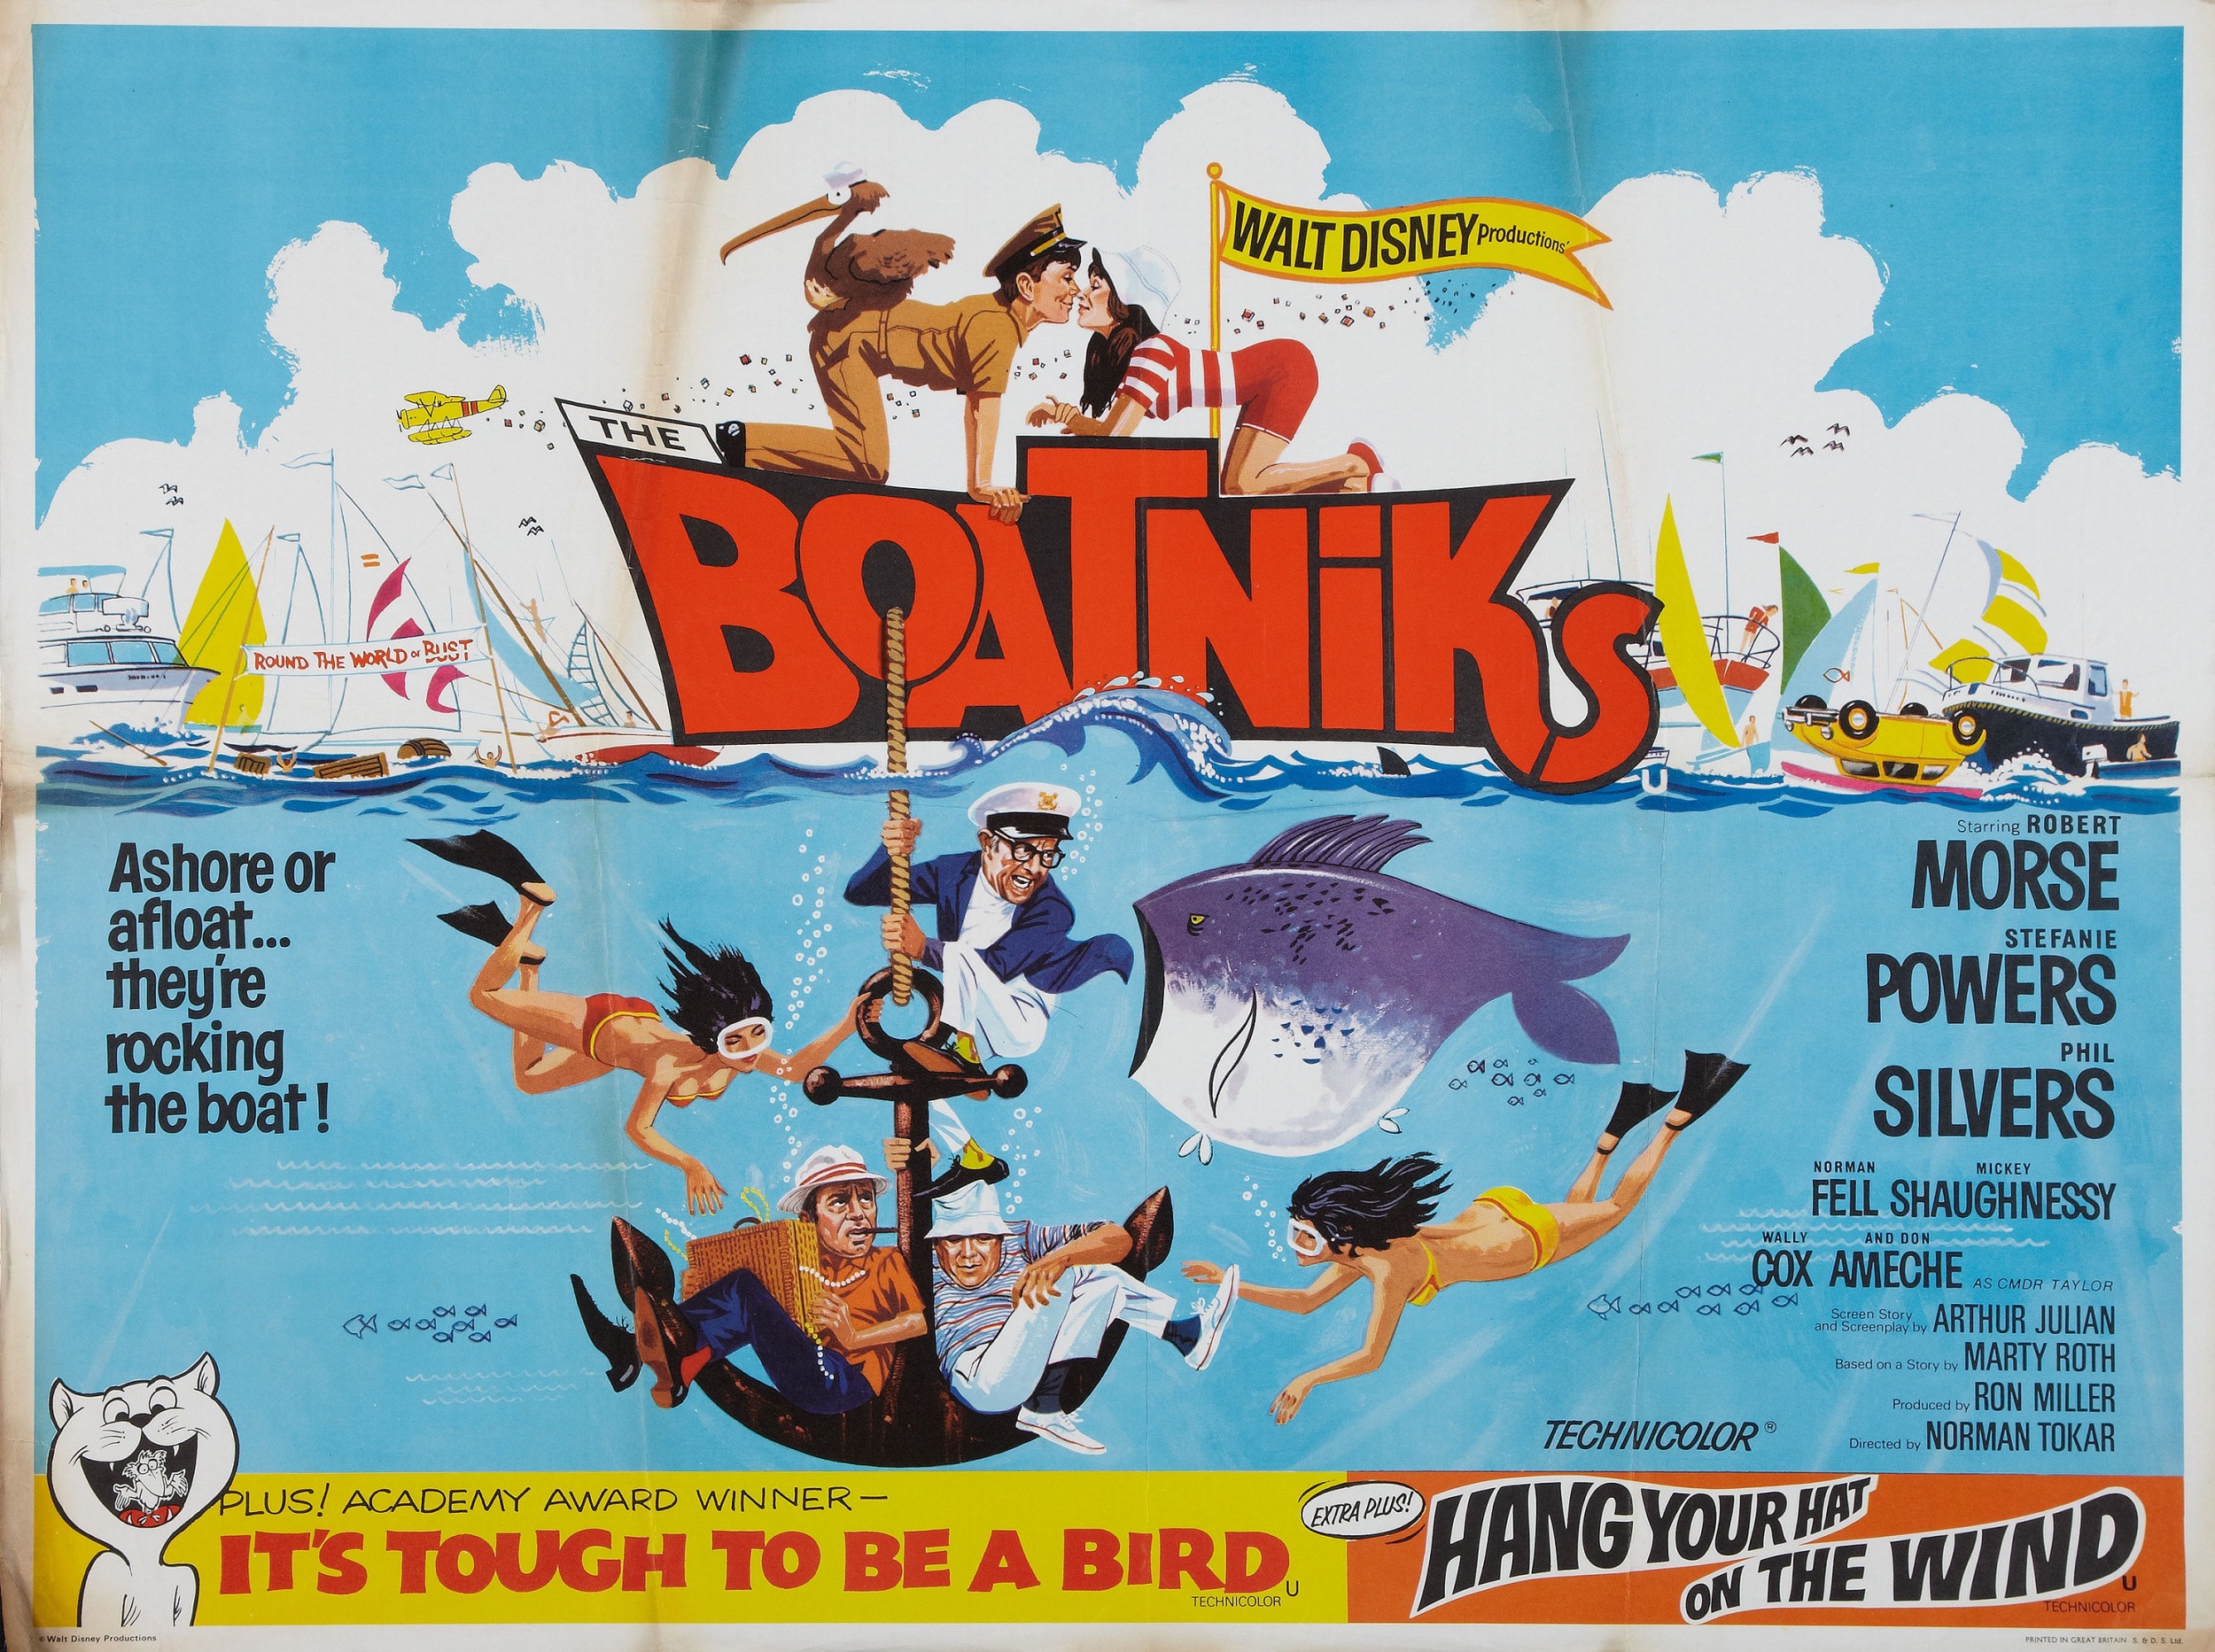 Mega Sized Movie Poster Image for Boatniks (#4 of 4)